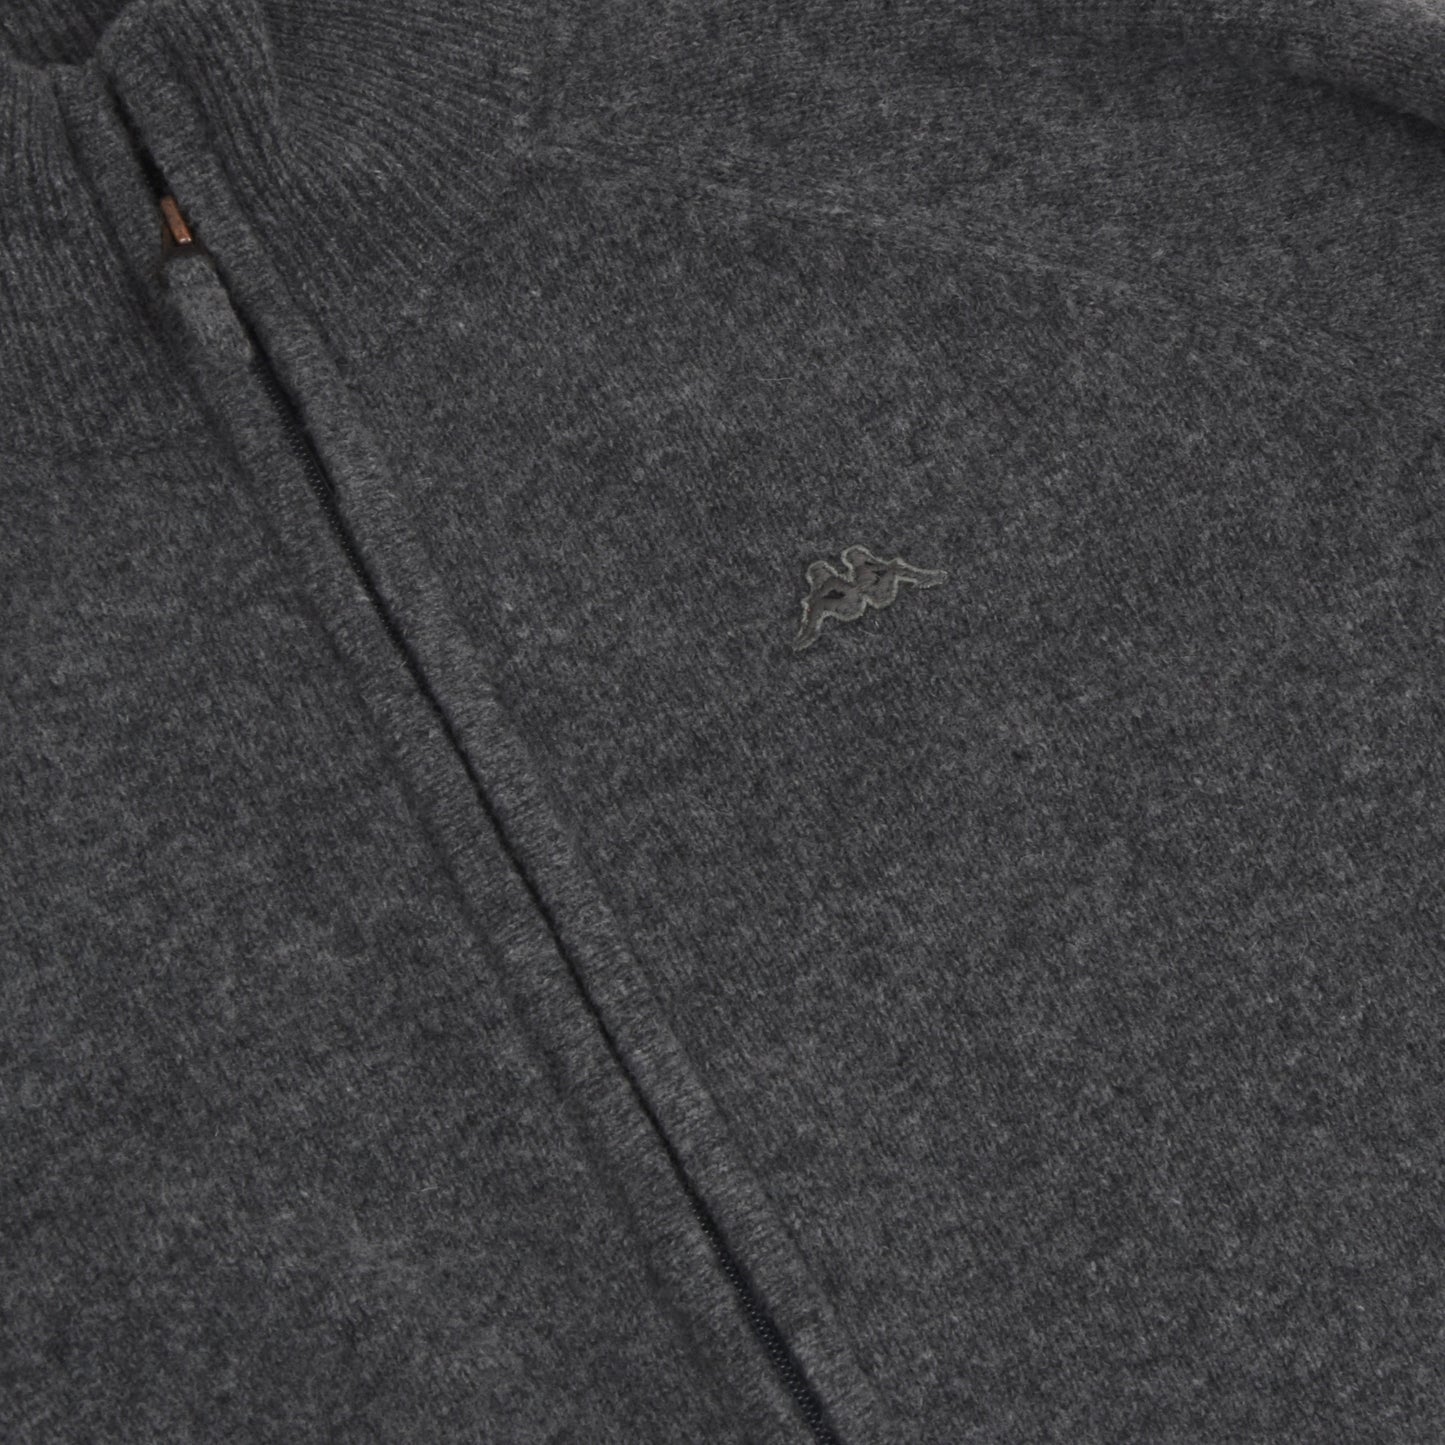 2x Kappa Wool Zip Cardigan Pullover Größe M - Marineblau/Grau